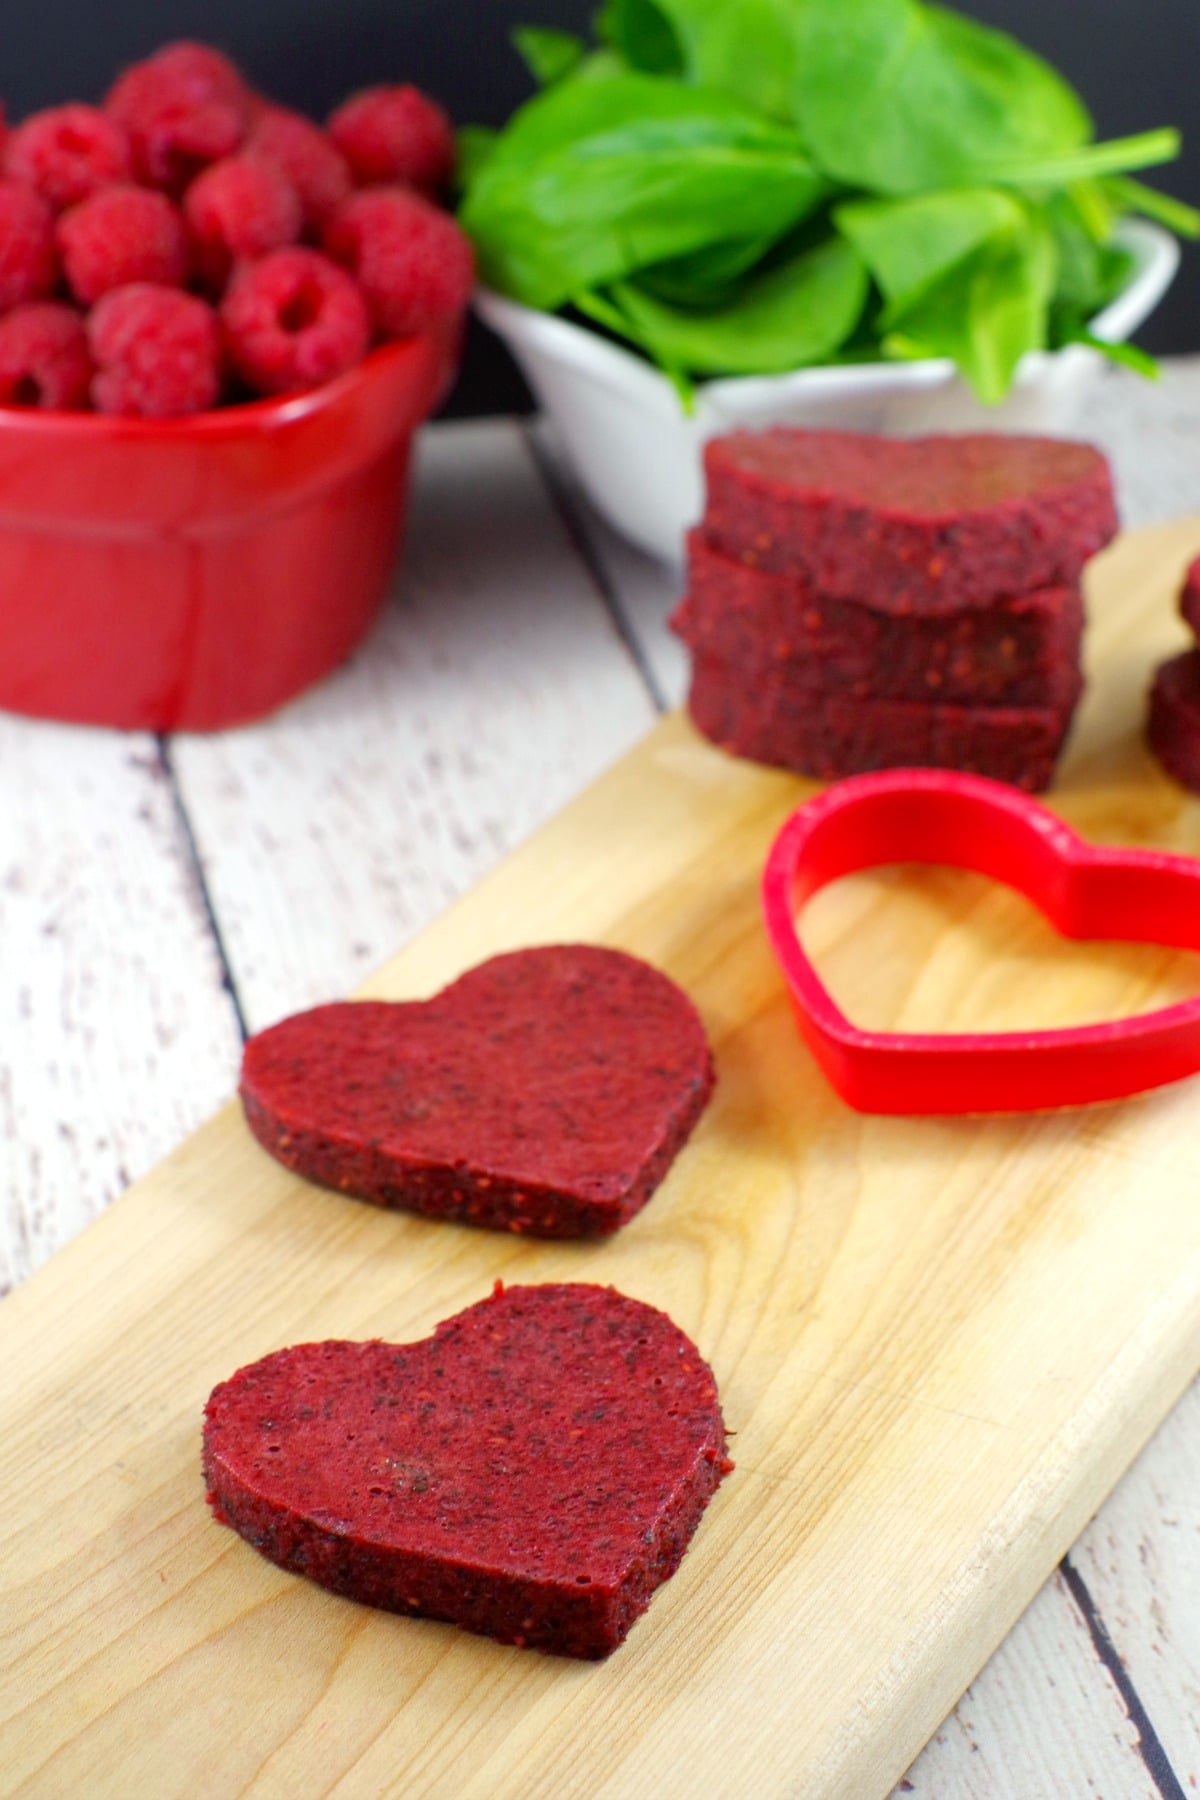 Healthy Valentine's Day snacks for kids - homemade jello hearts